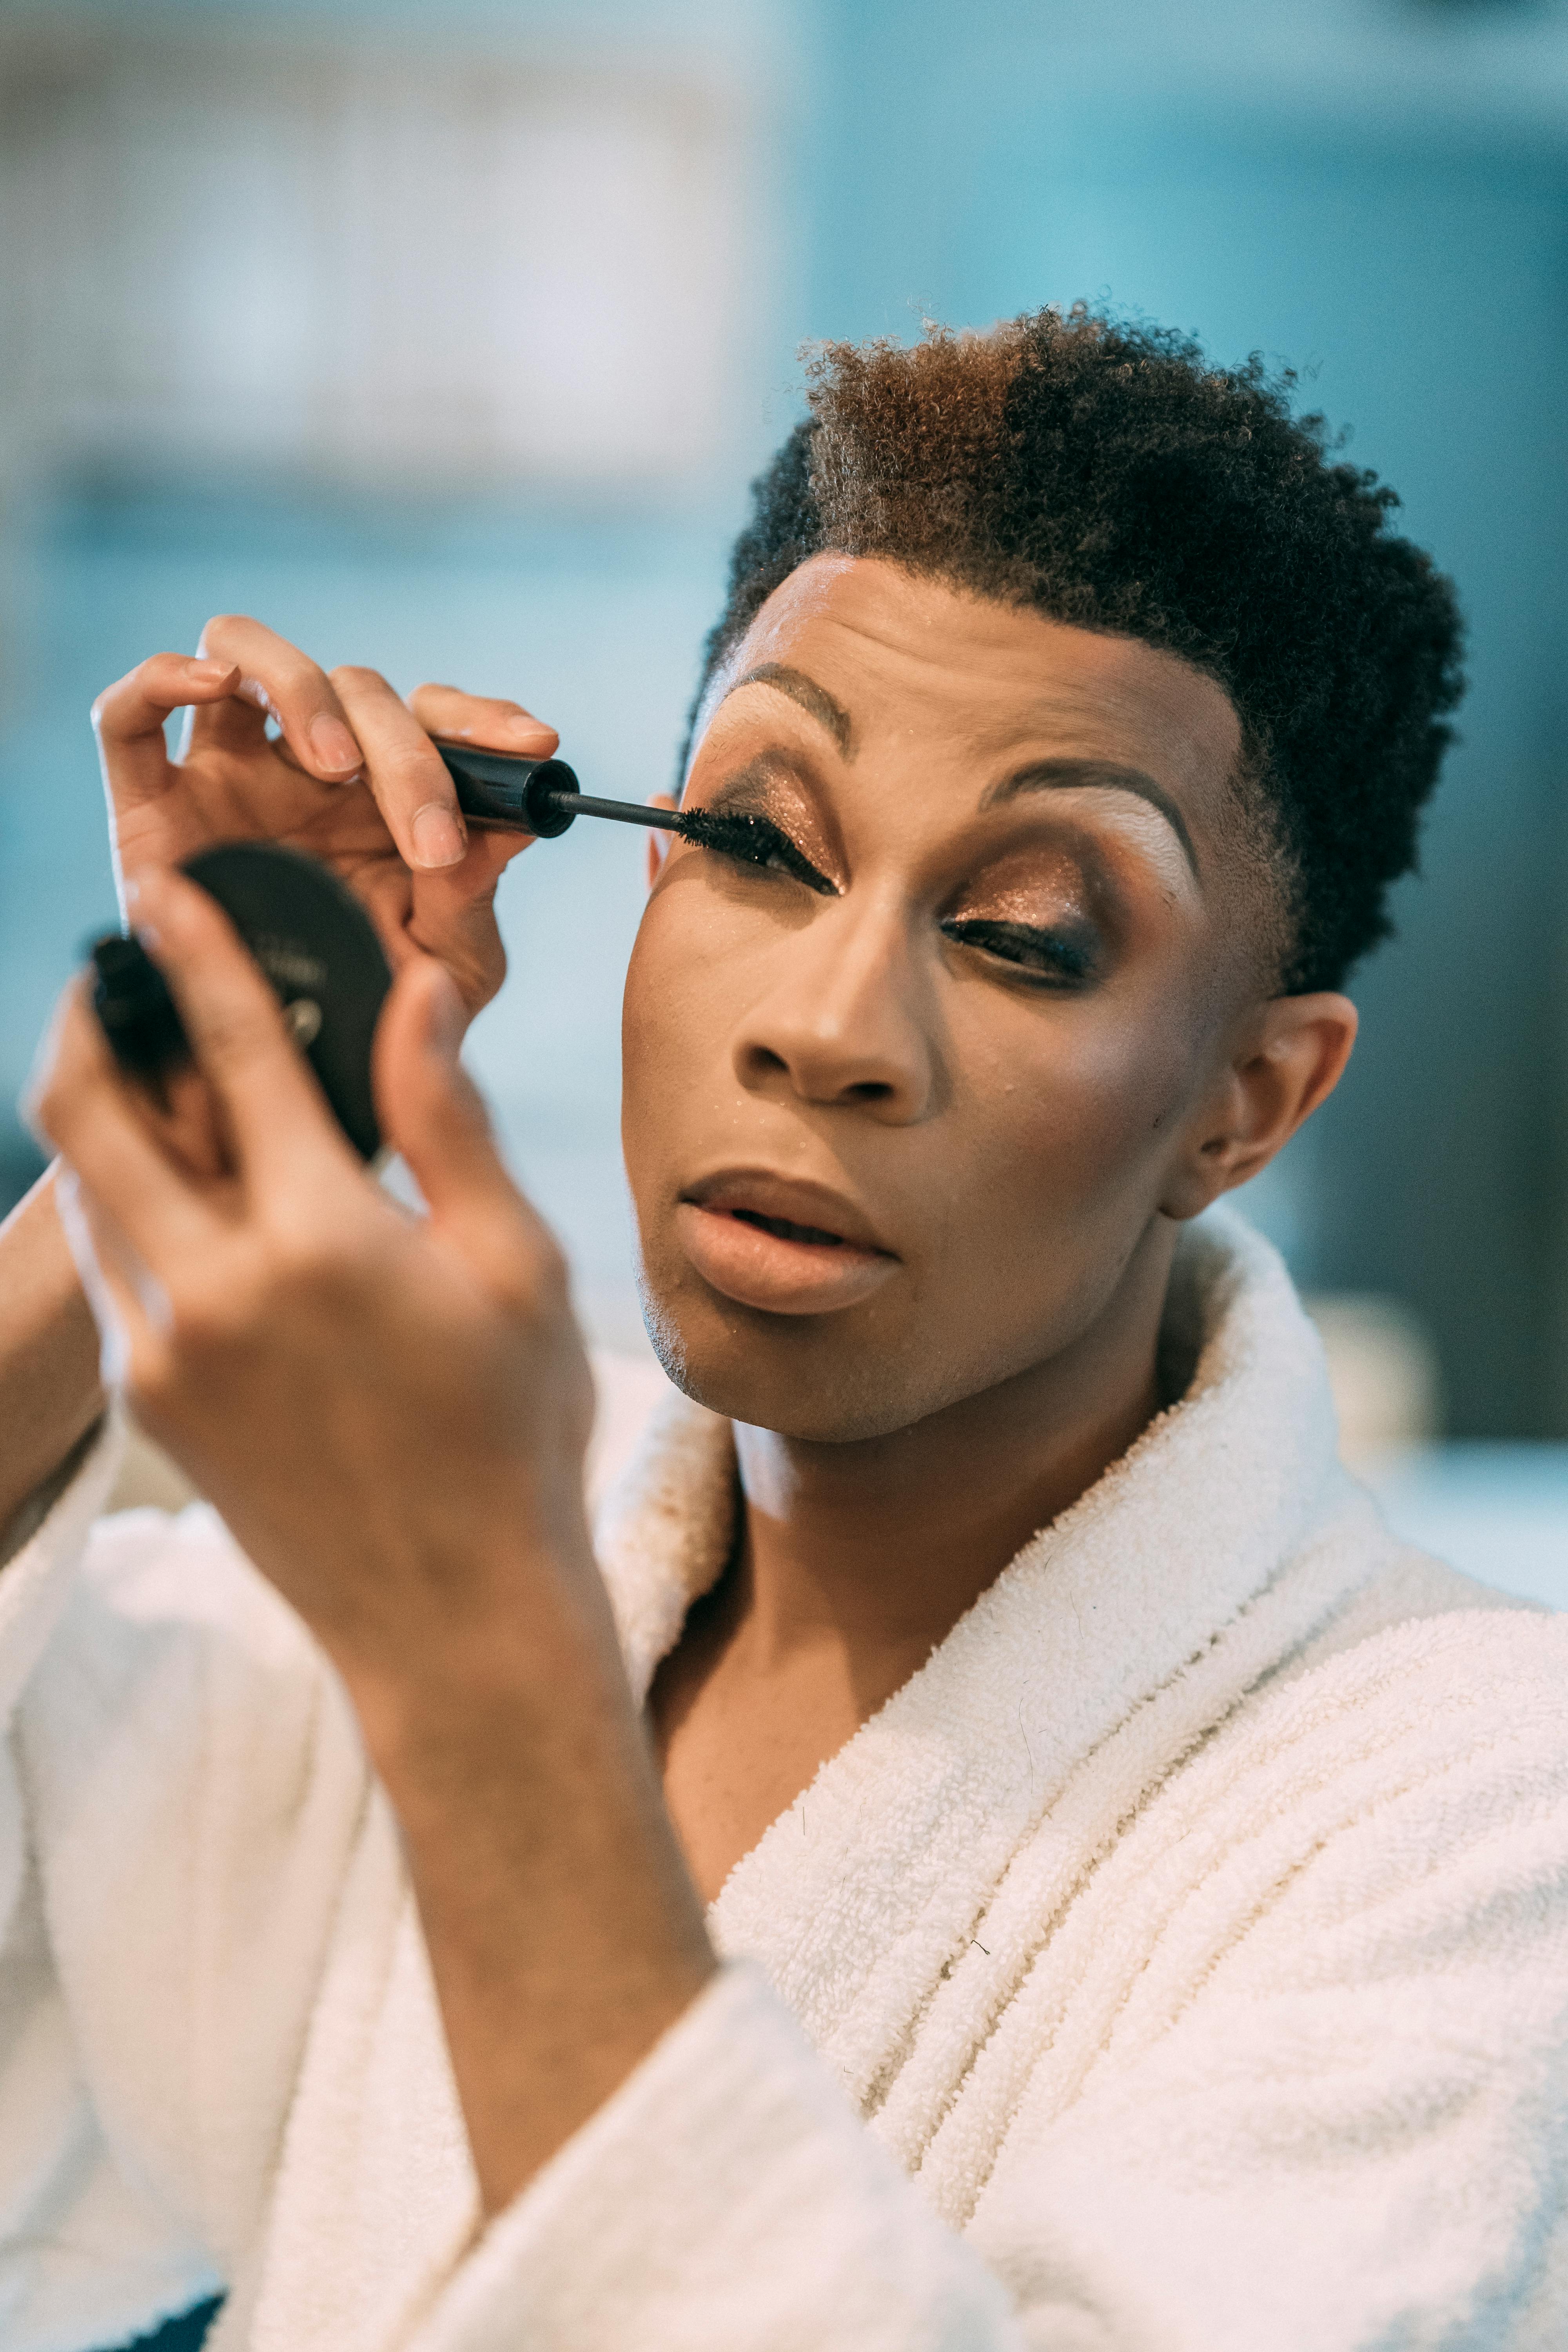 feminine black man applying makeup